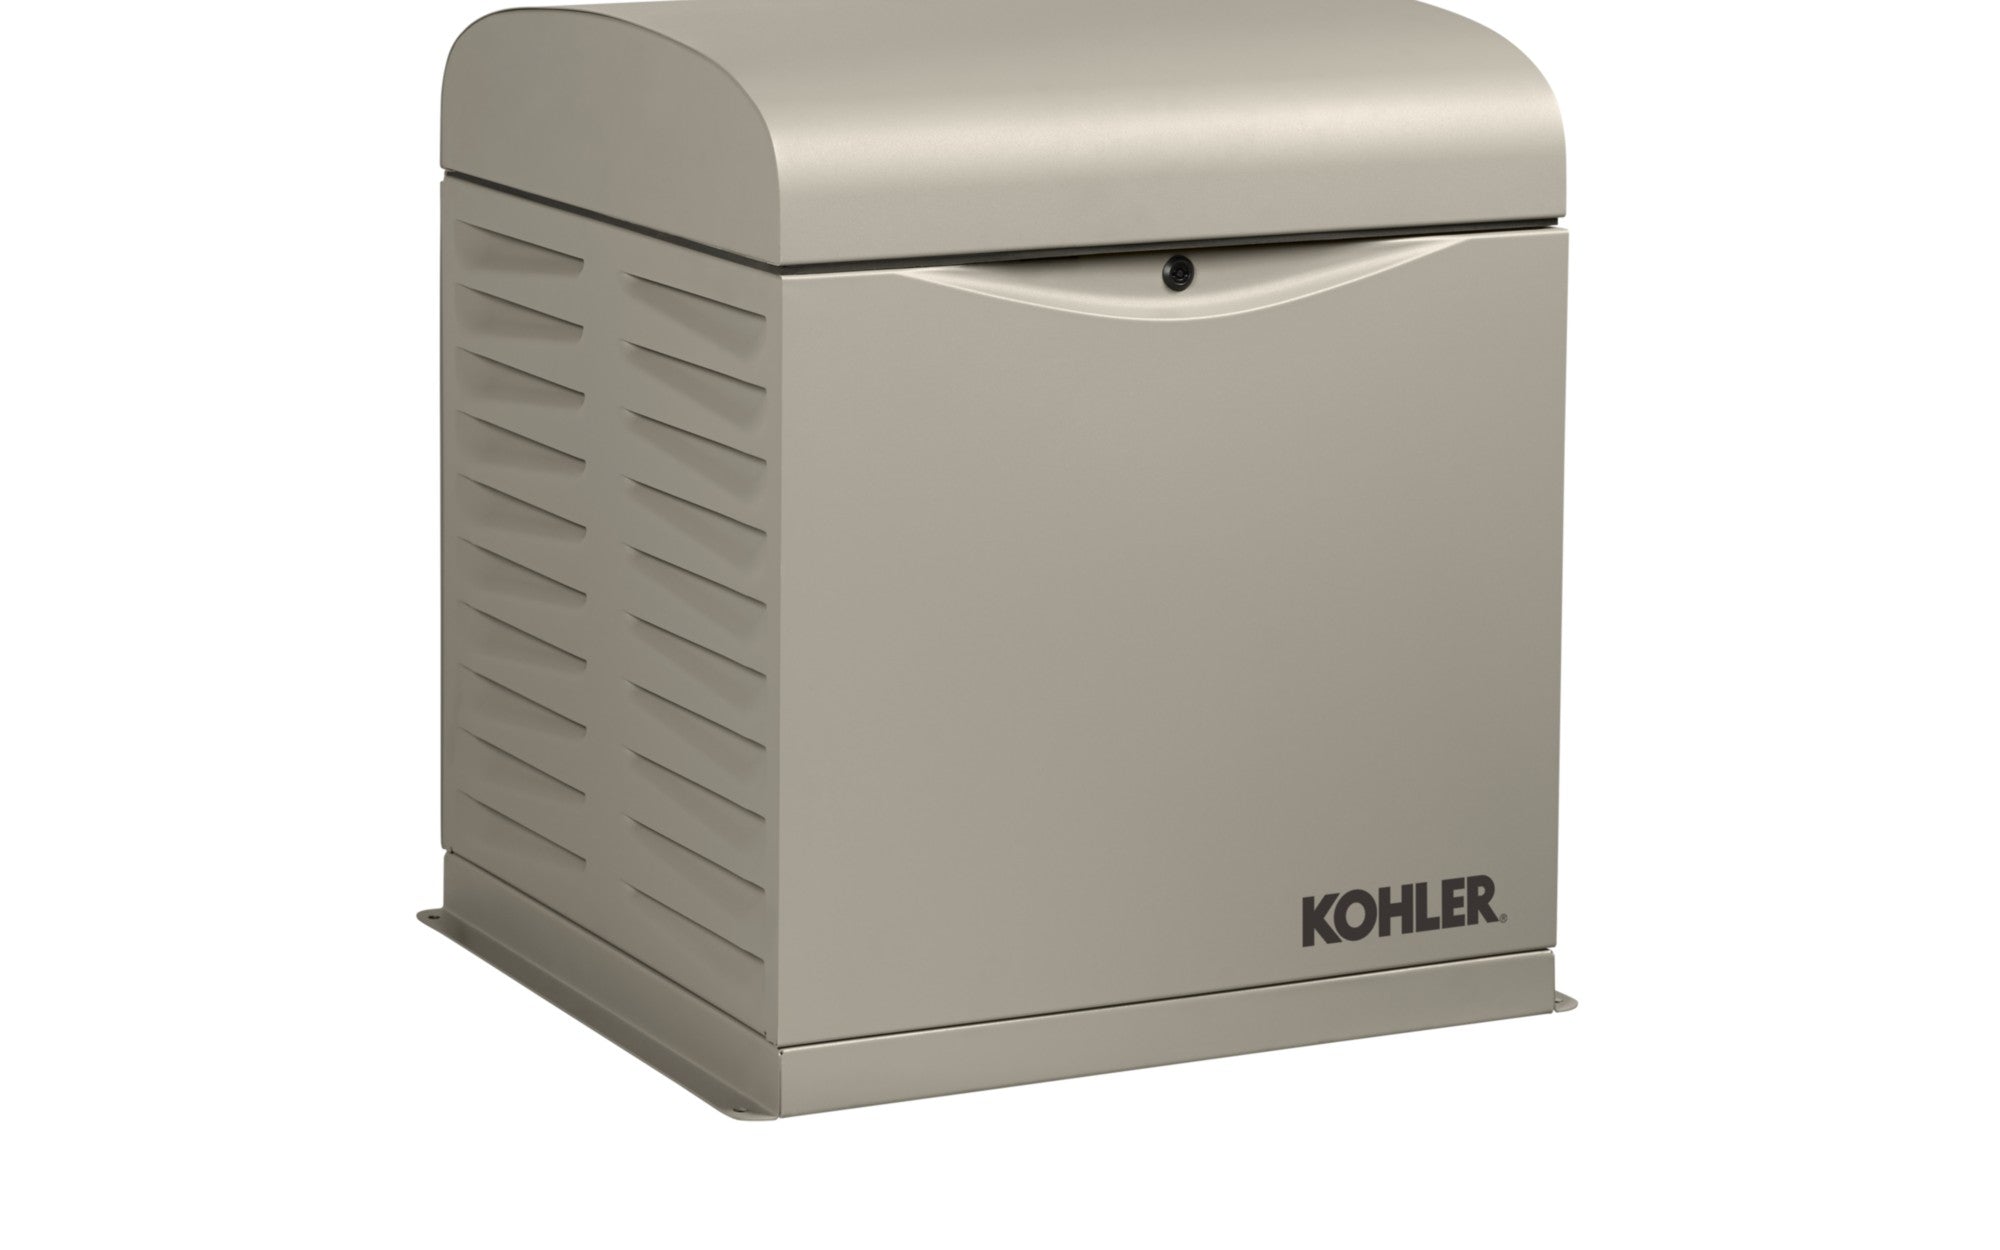 Kohler 10RESV-QS8 Air-Cooled Standby Generator 10,000-Watt